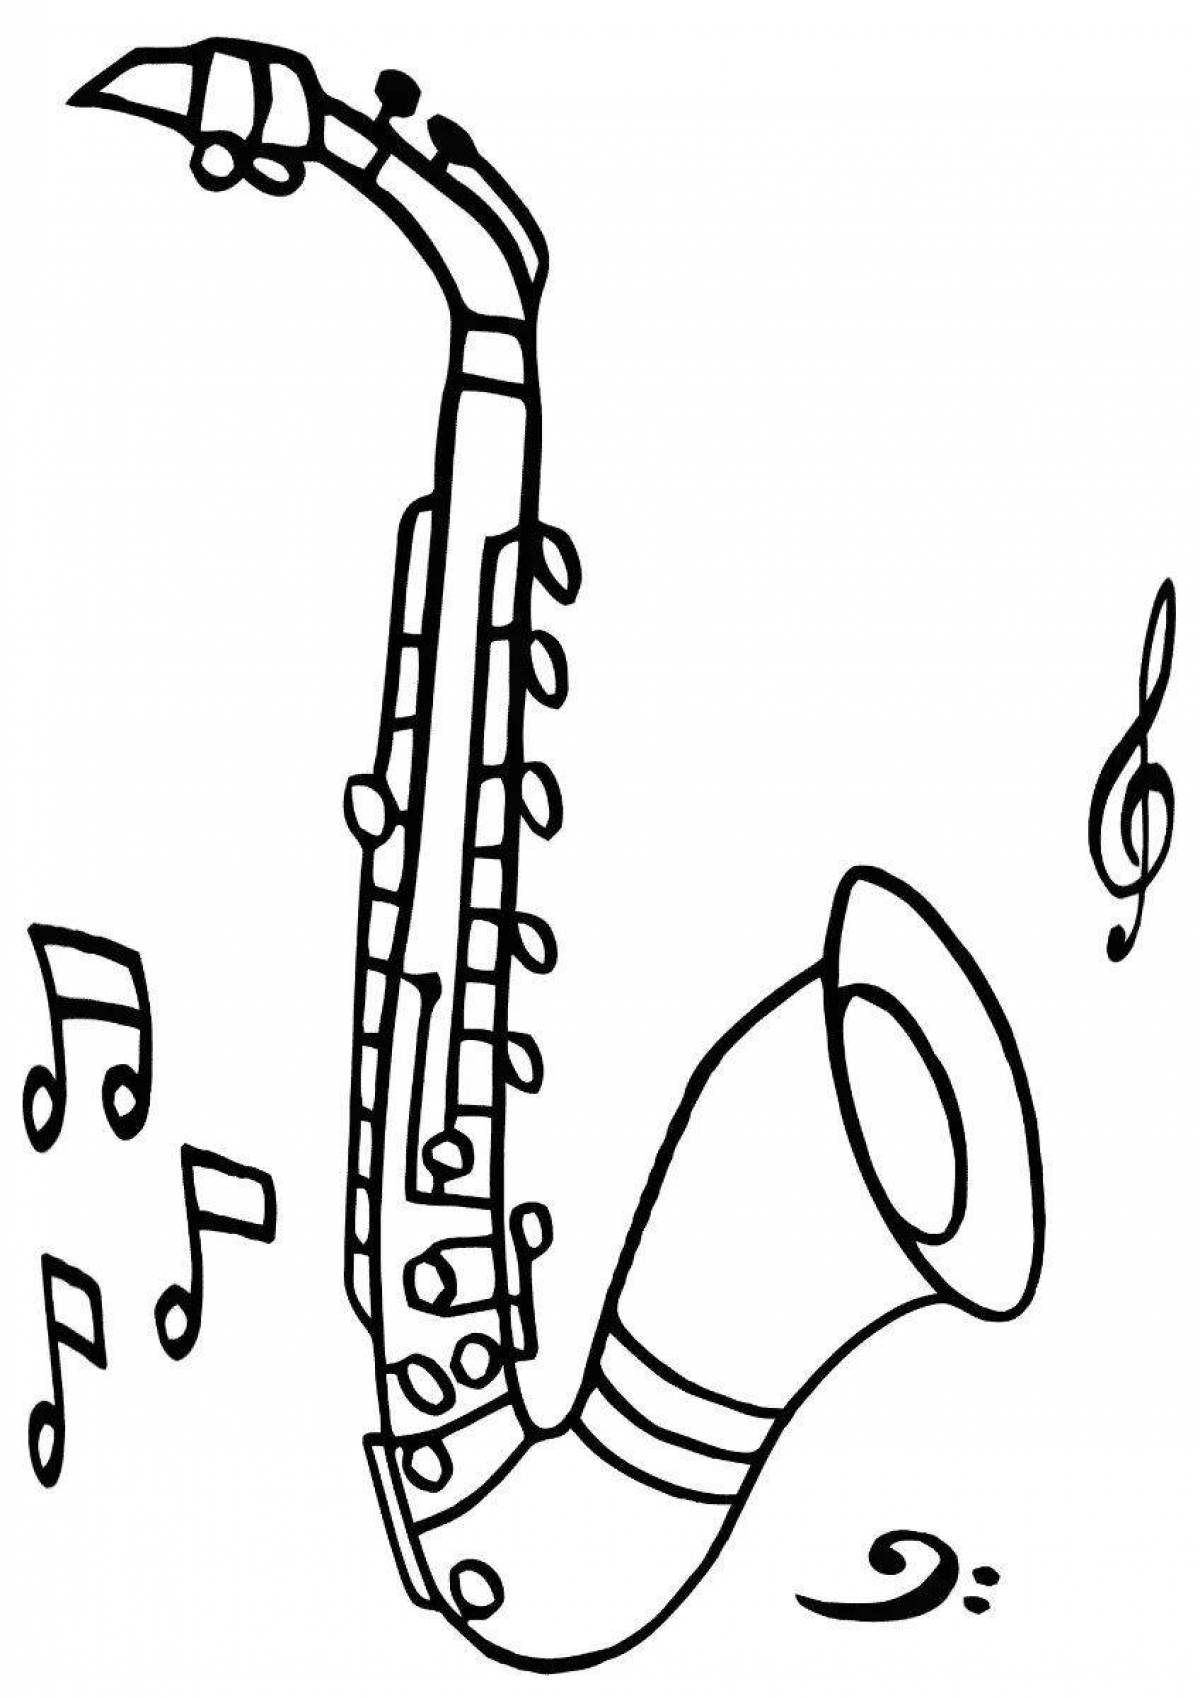 Coloring page energetic saxophone